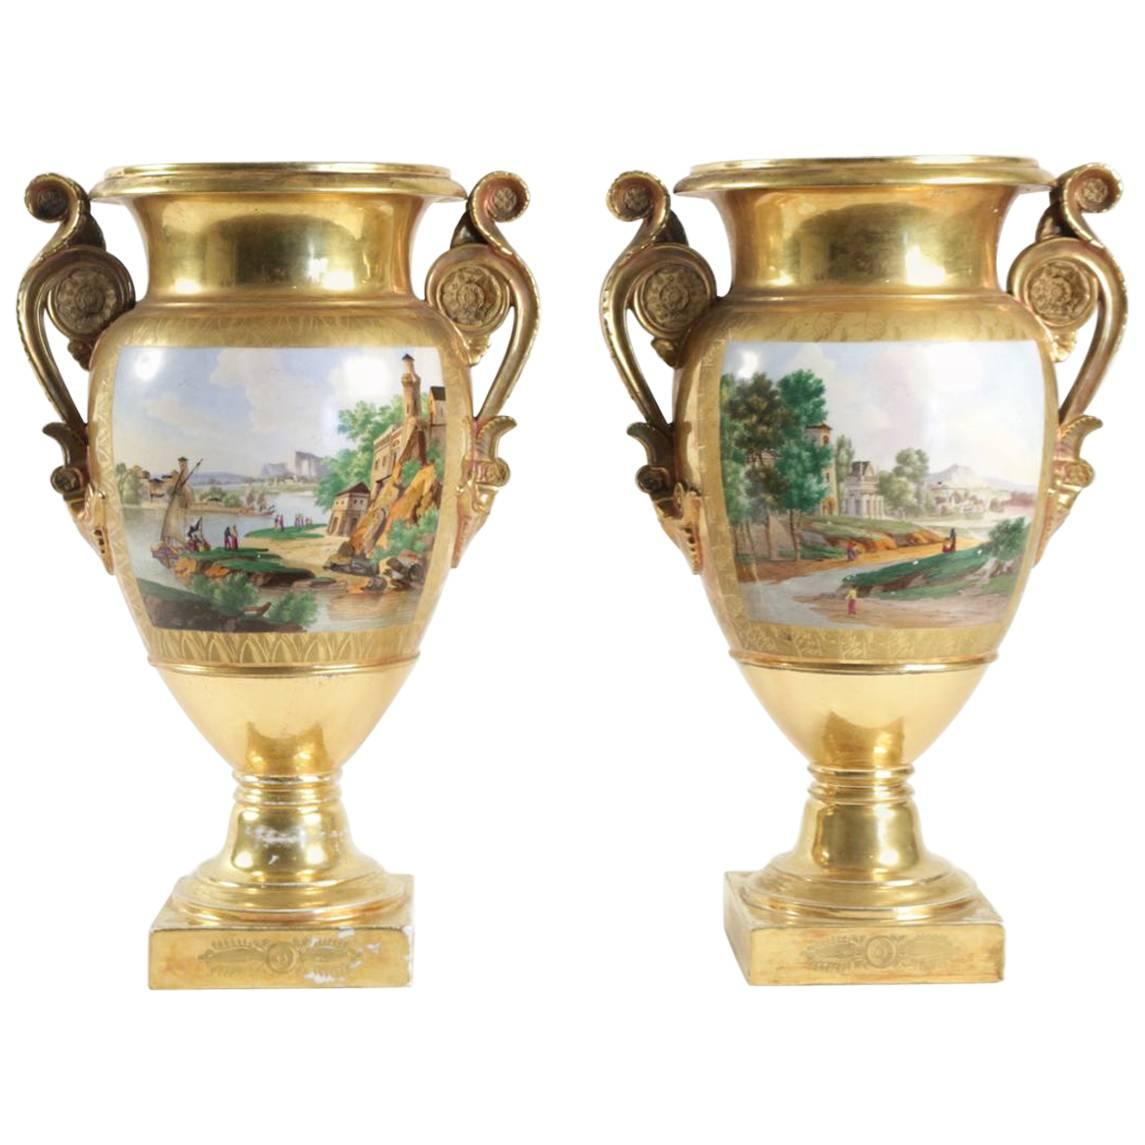 Pair of Vases in Old Paris Porcelain, Period Charles X